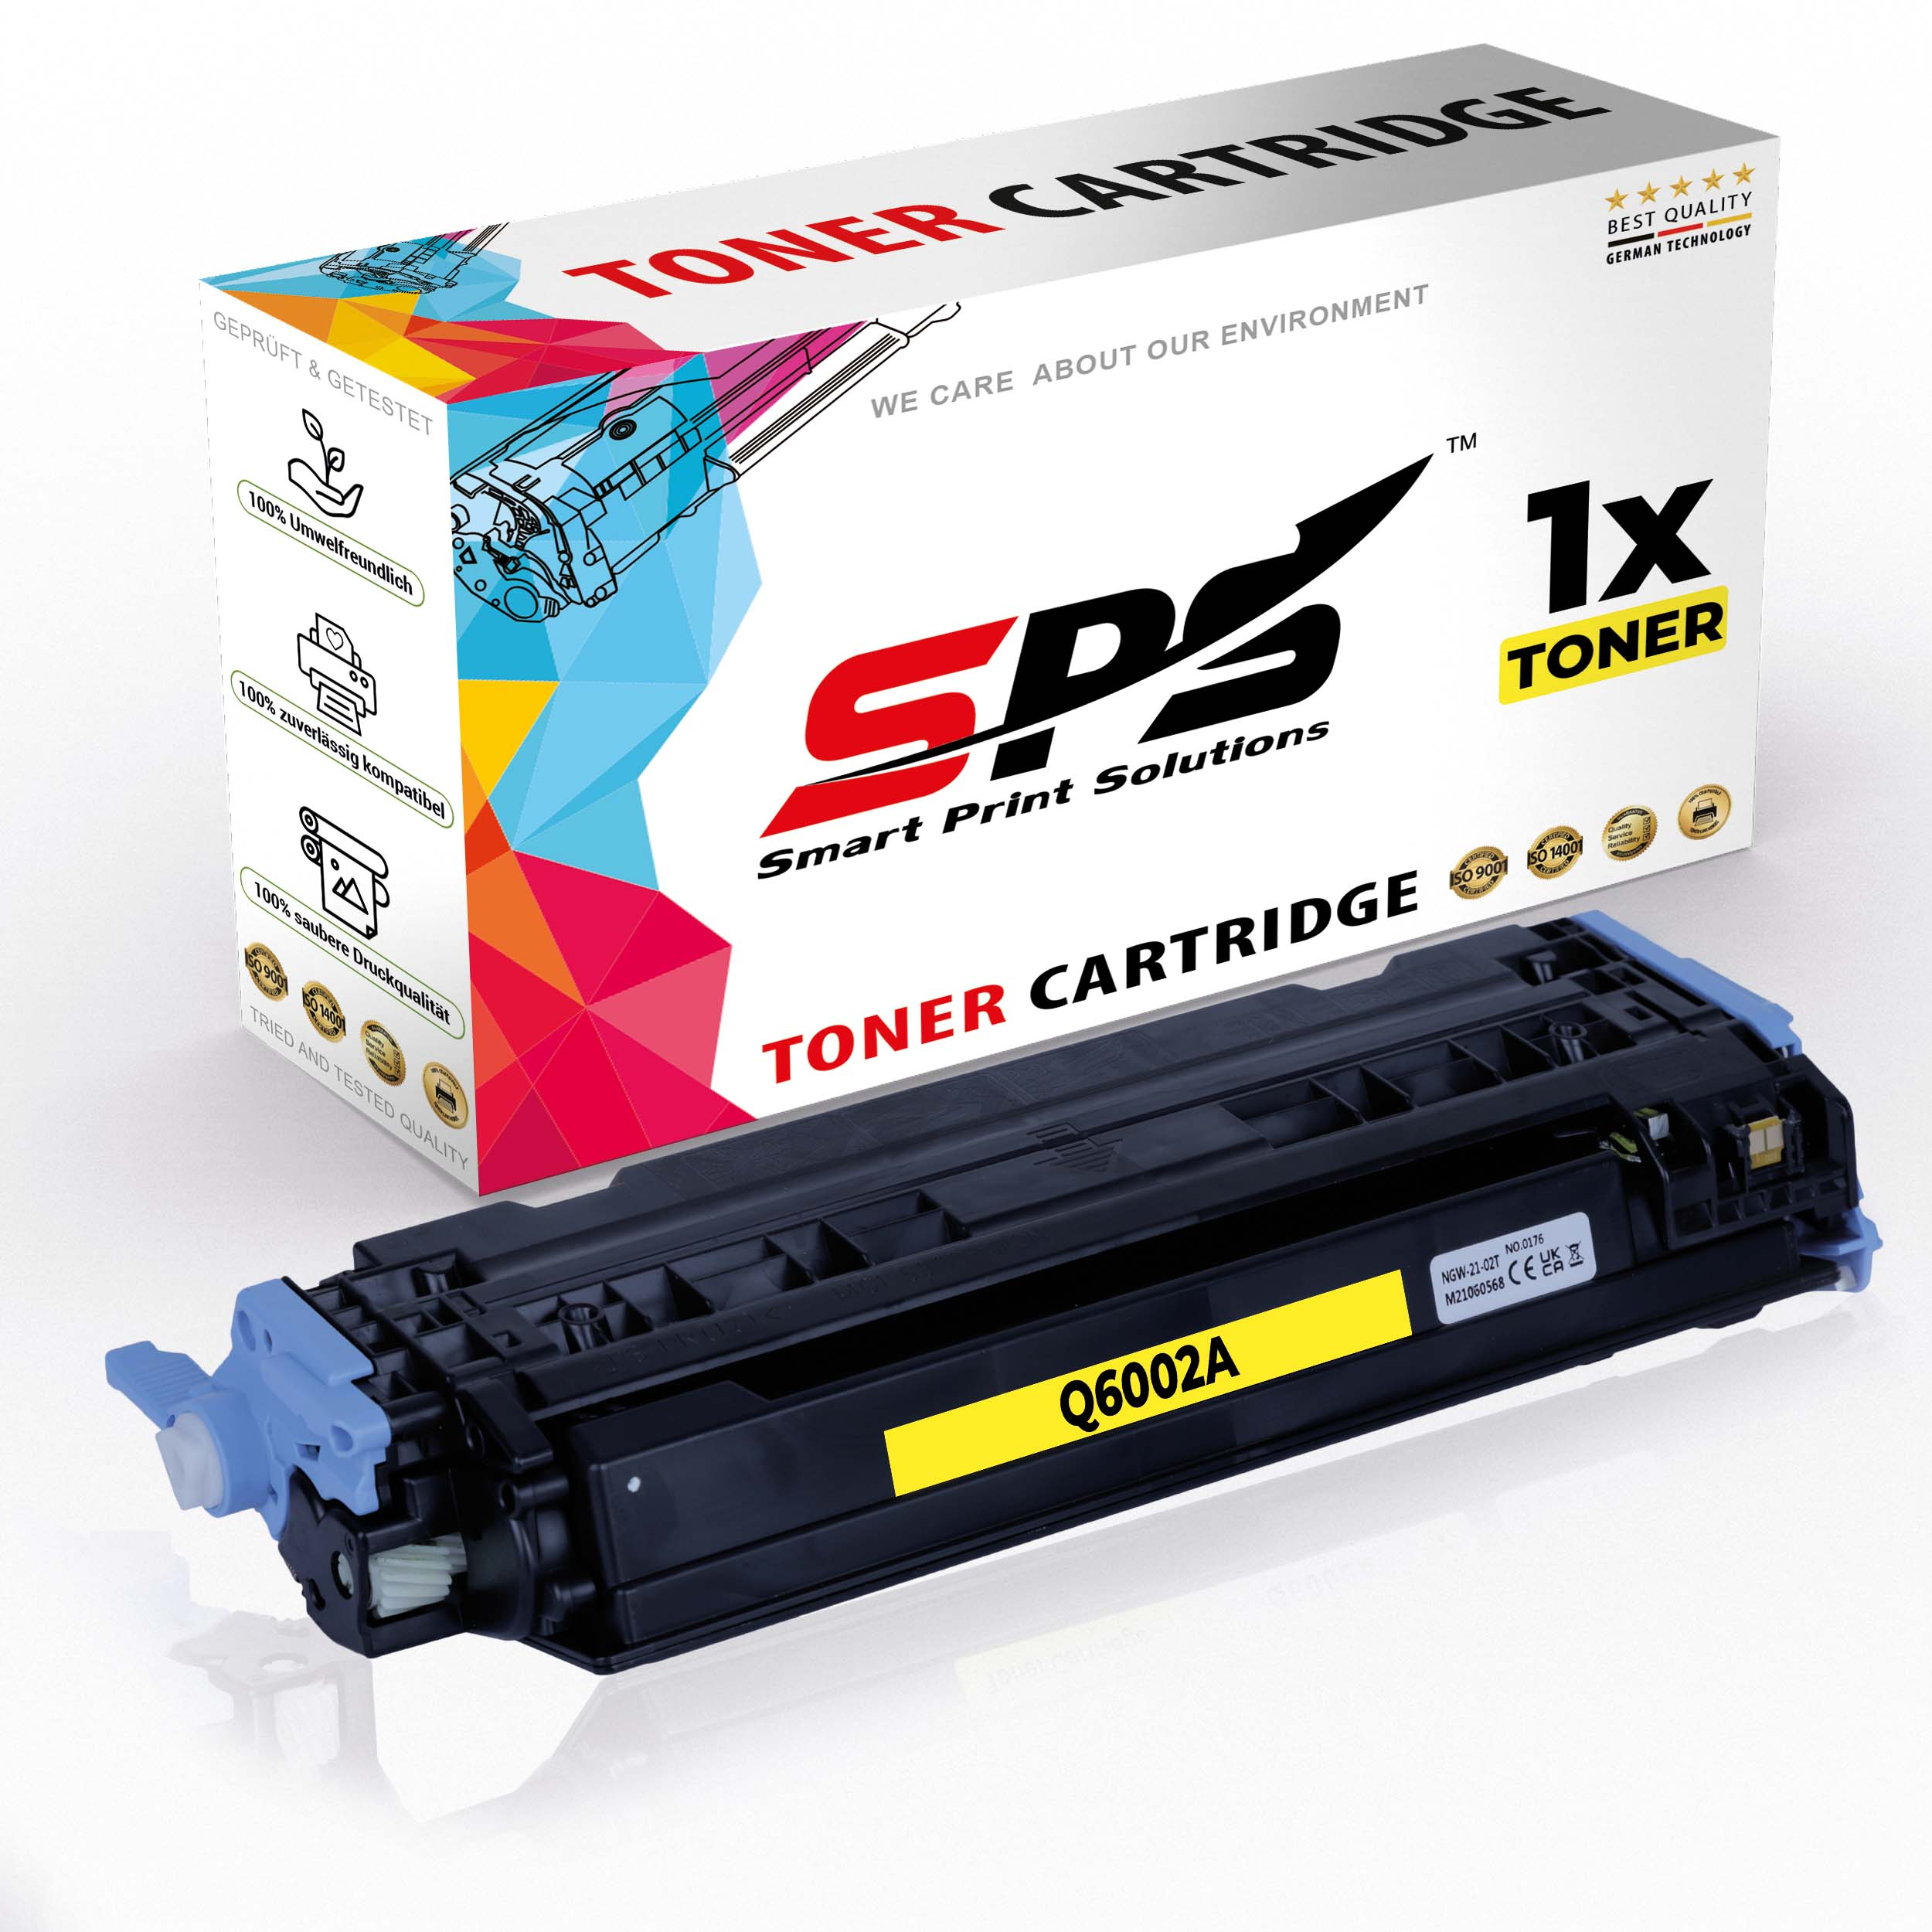 SPS S-8252 124A Toner 2600) Gelb Color / Laserjet (Q6002A